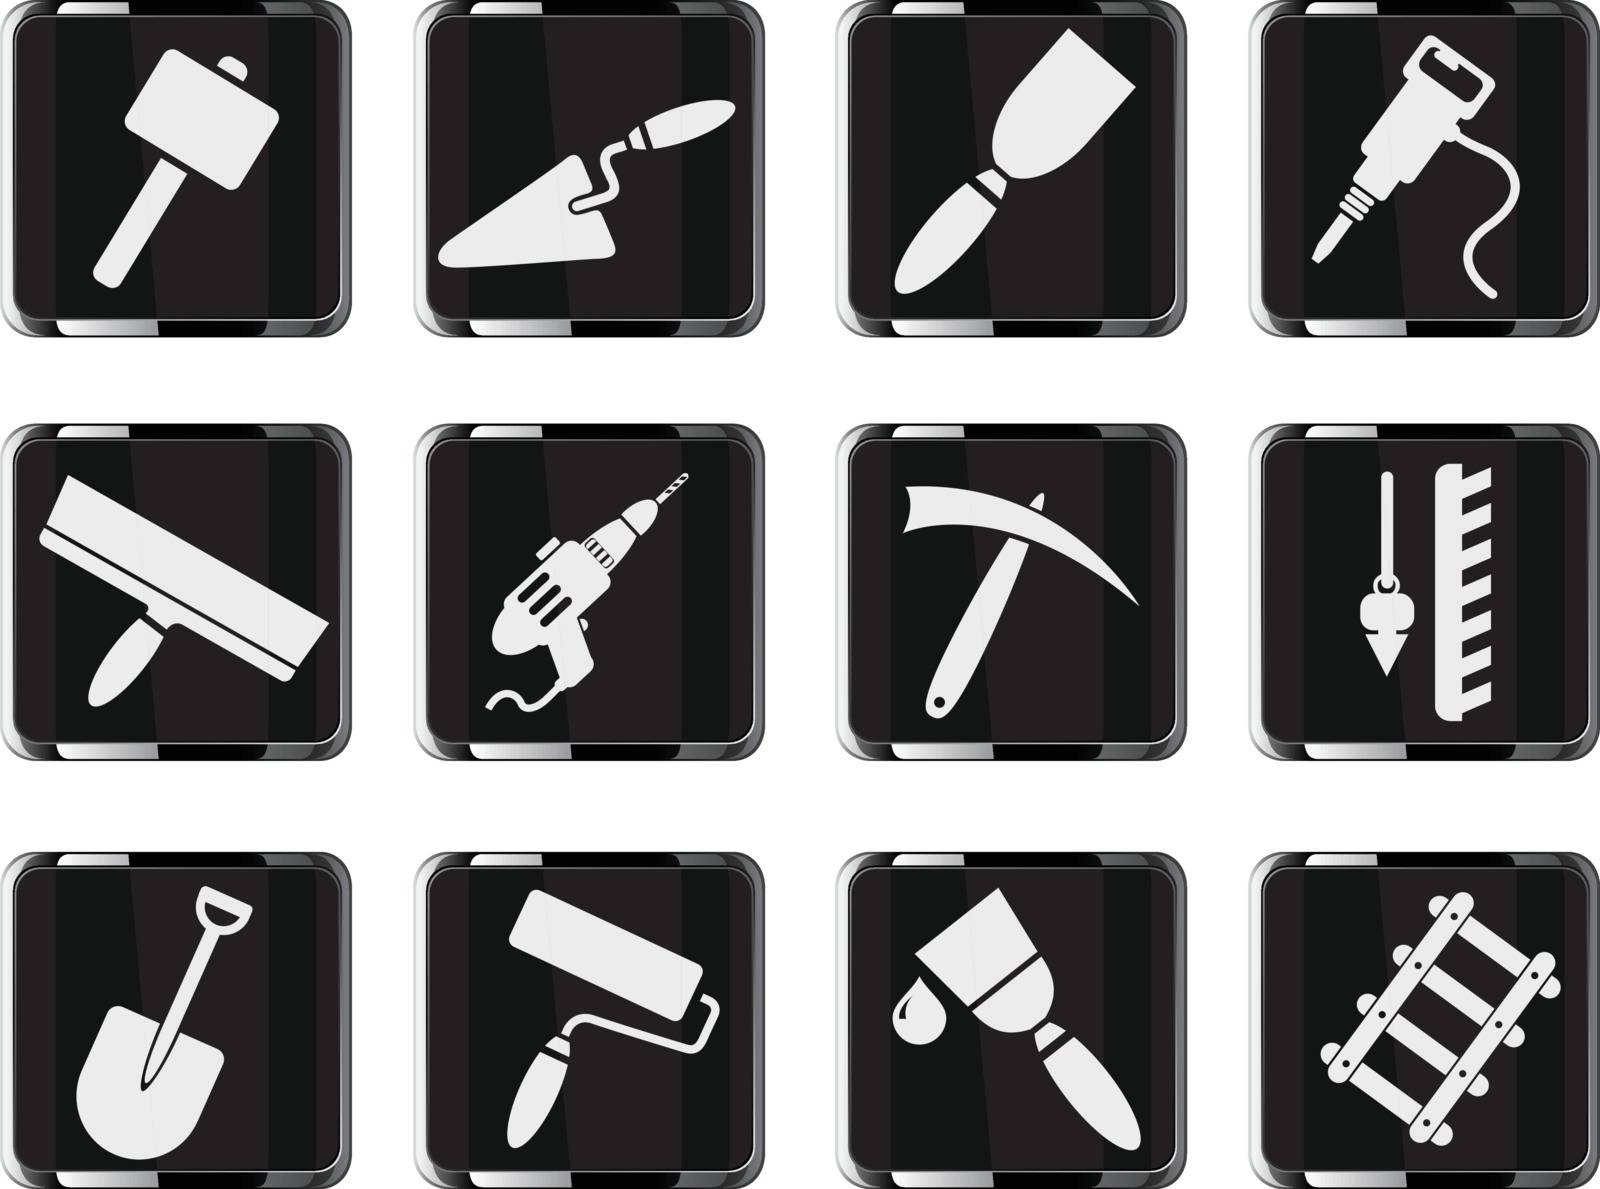 Symbols of building equipment by ayax